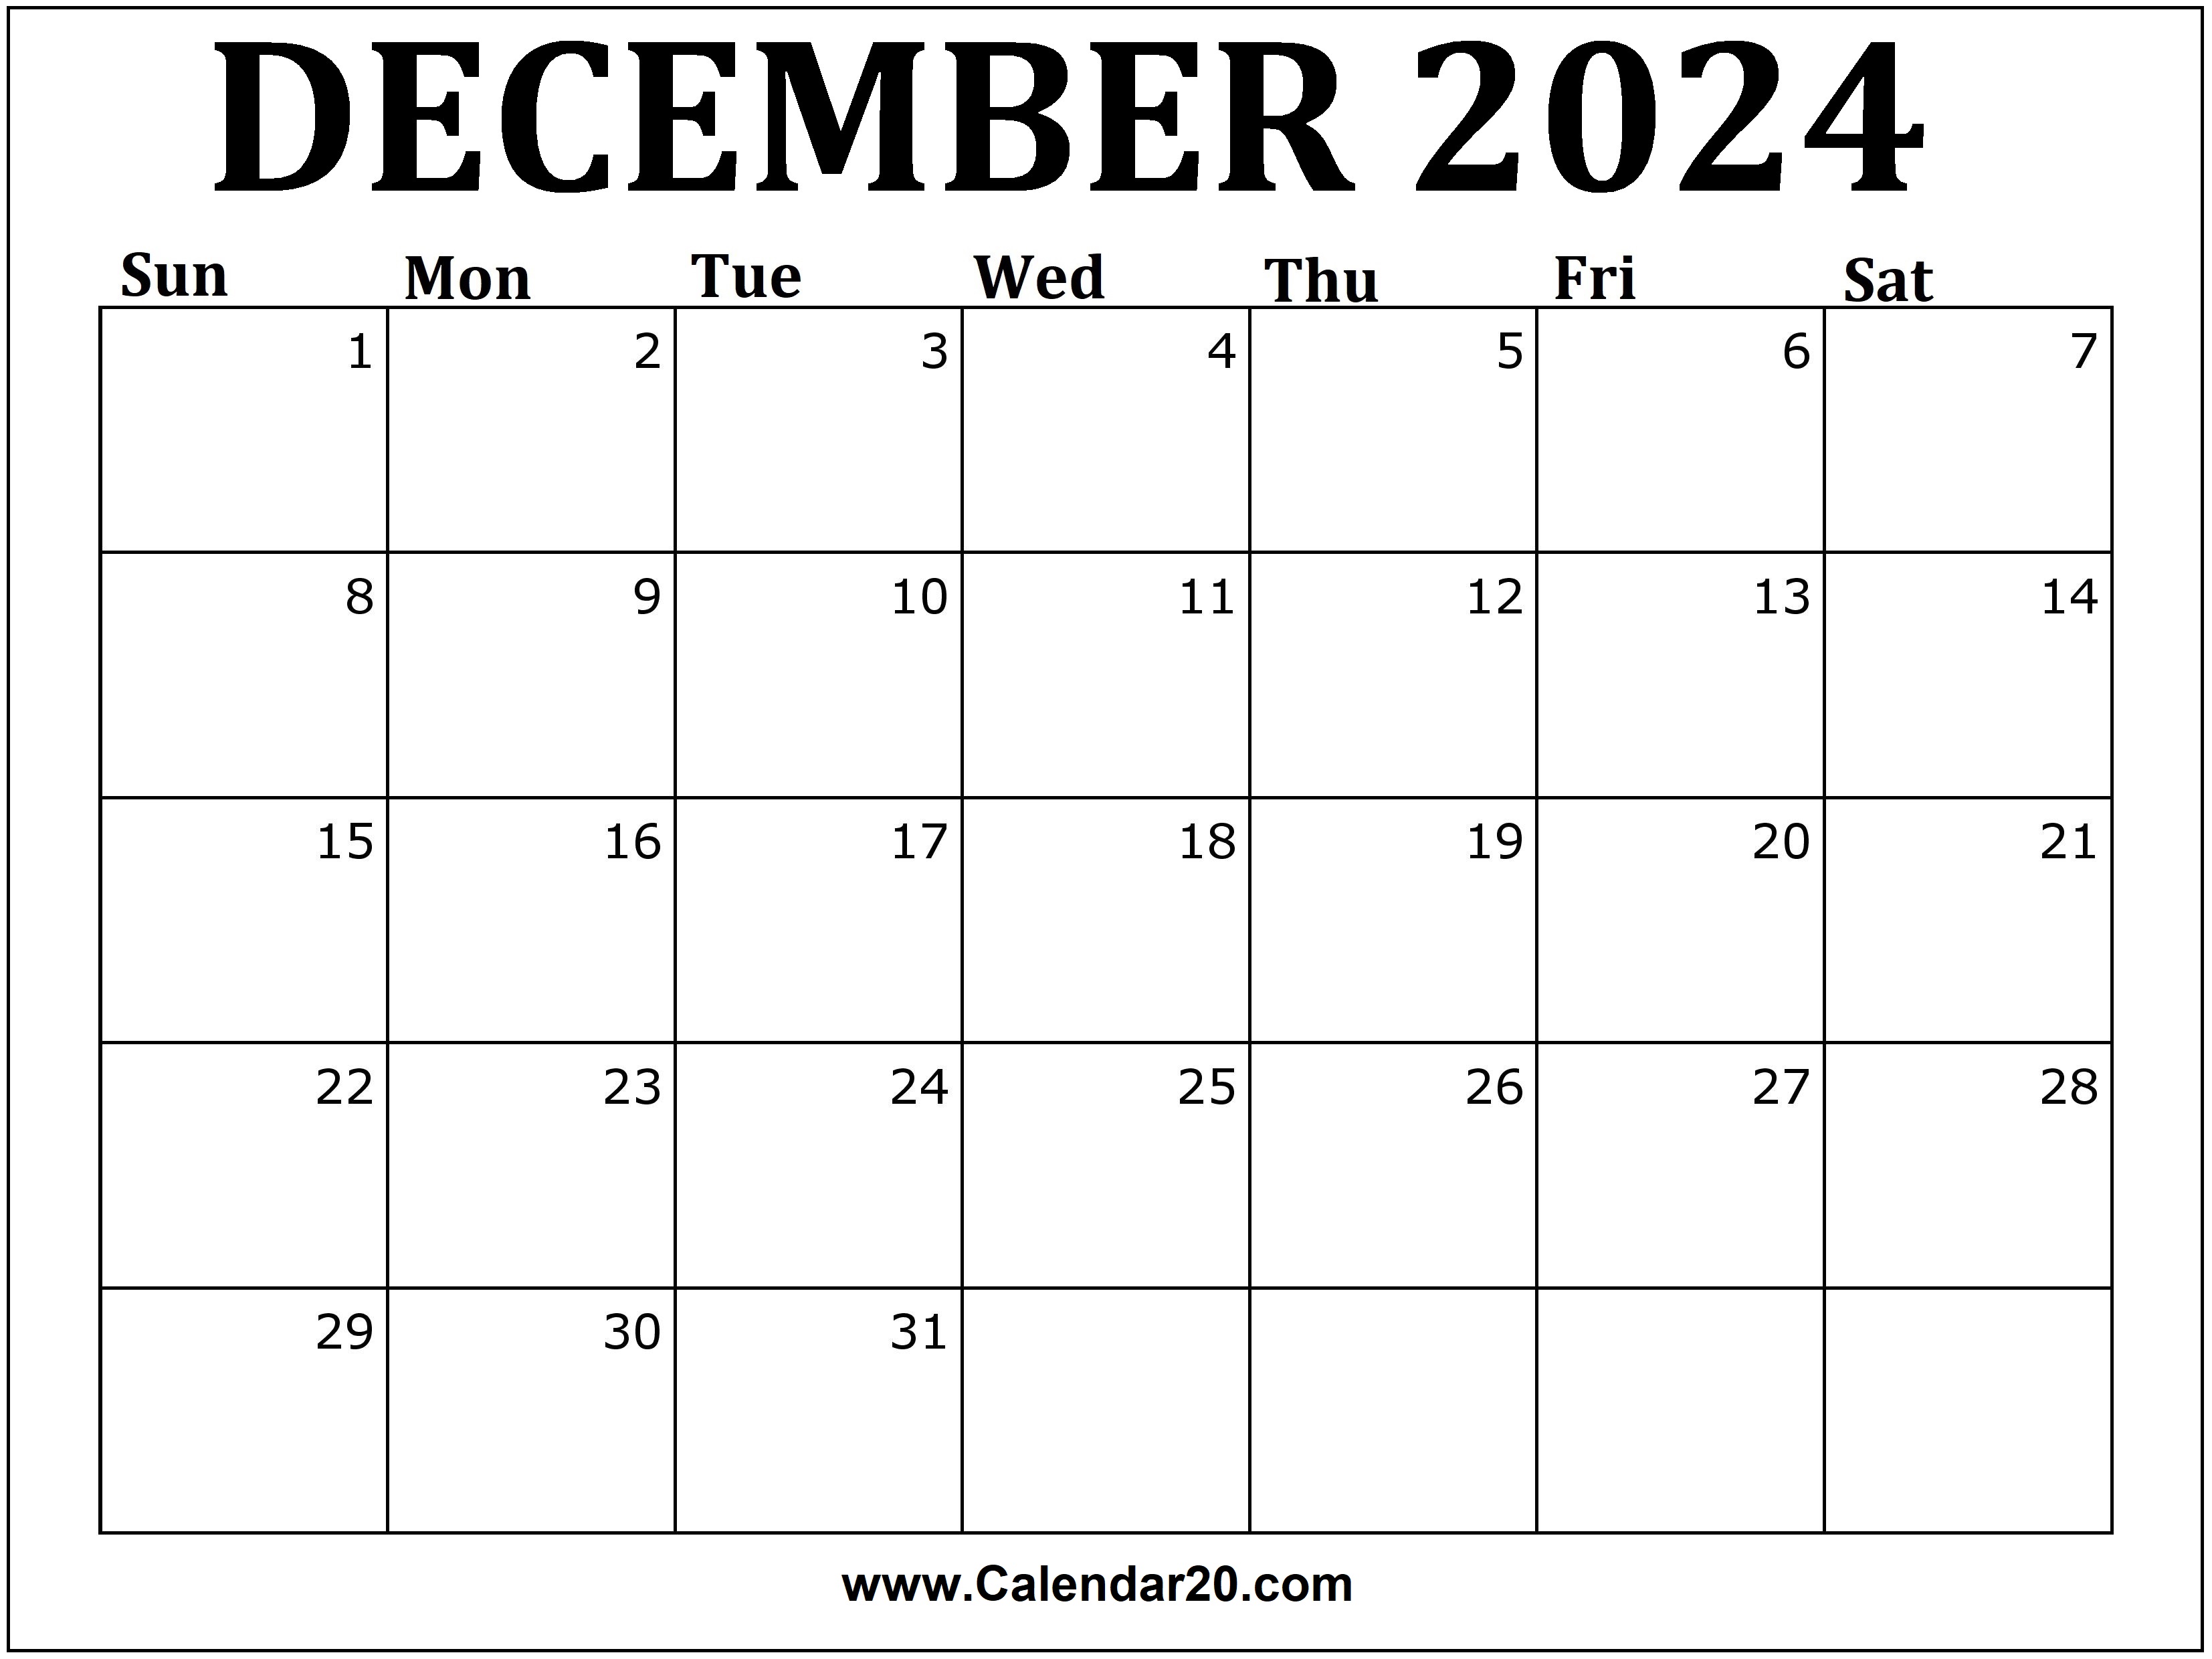 december-2024-calendar-printable-calendar20